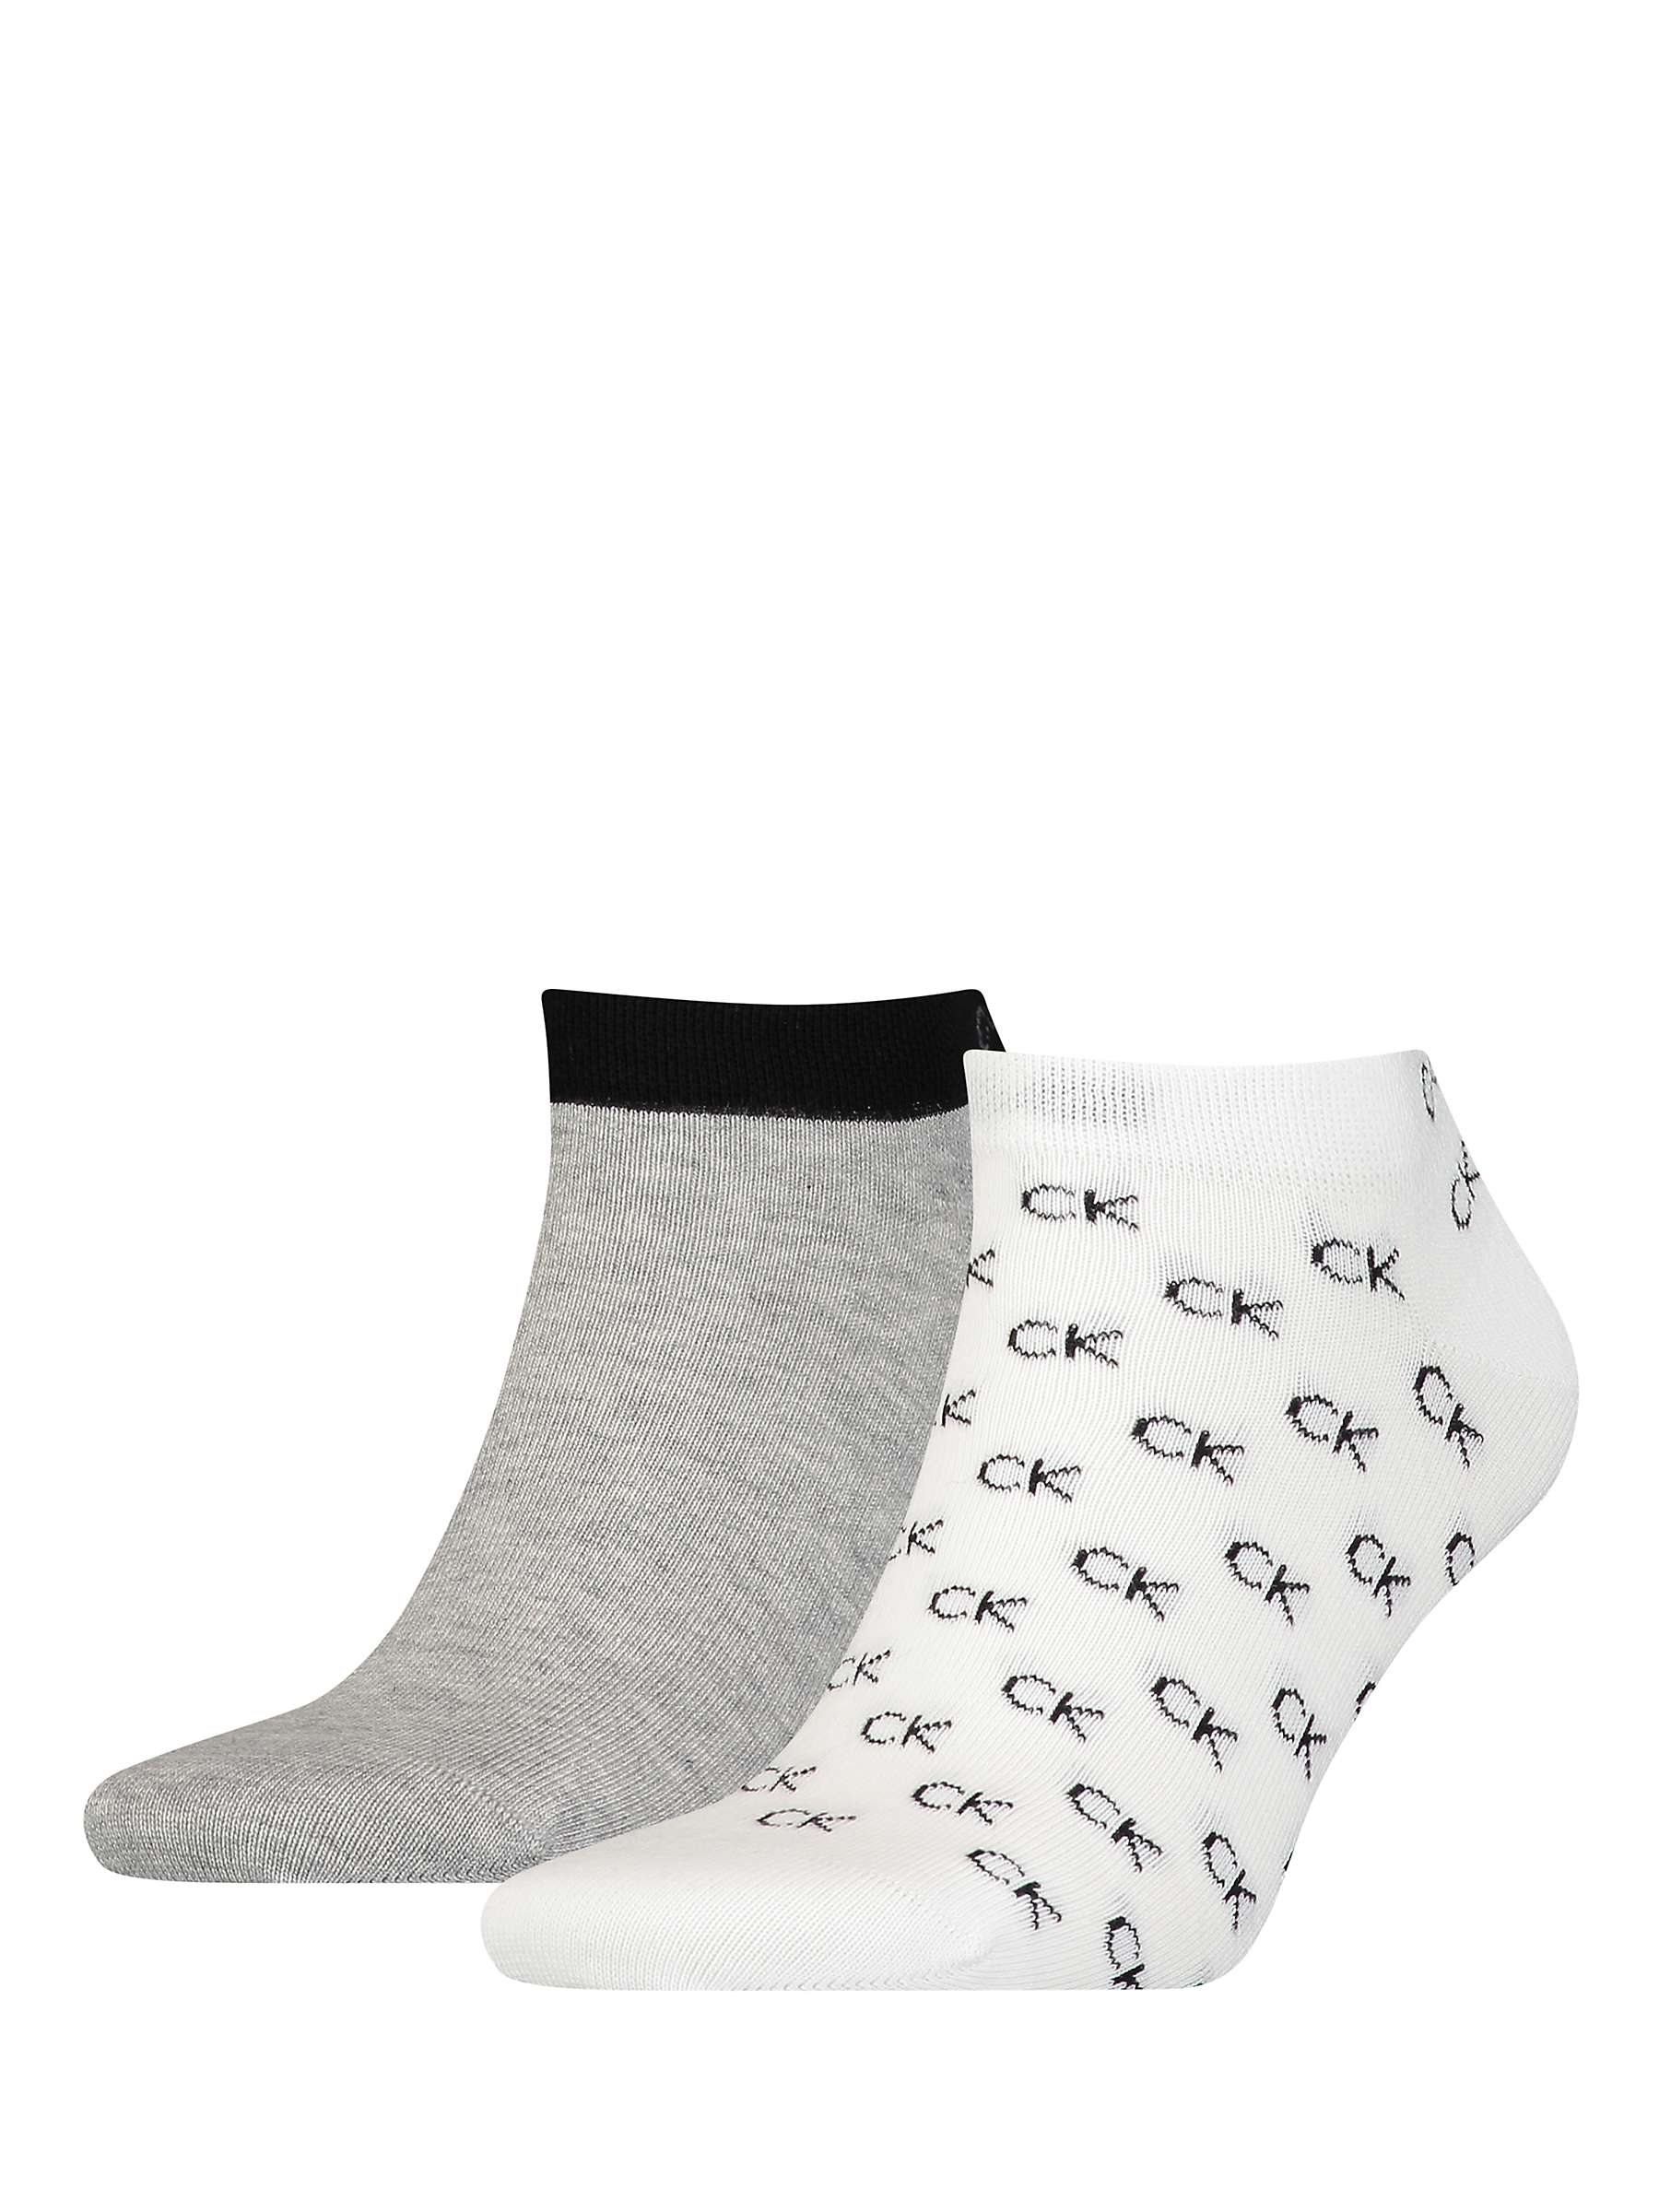 Buy Calvin Klein Cotton Ankle Socks, Pack of 2, 004 White Online at johnlewis.com